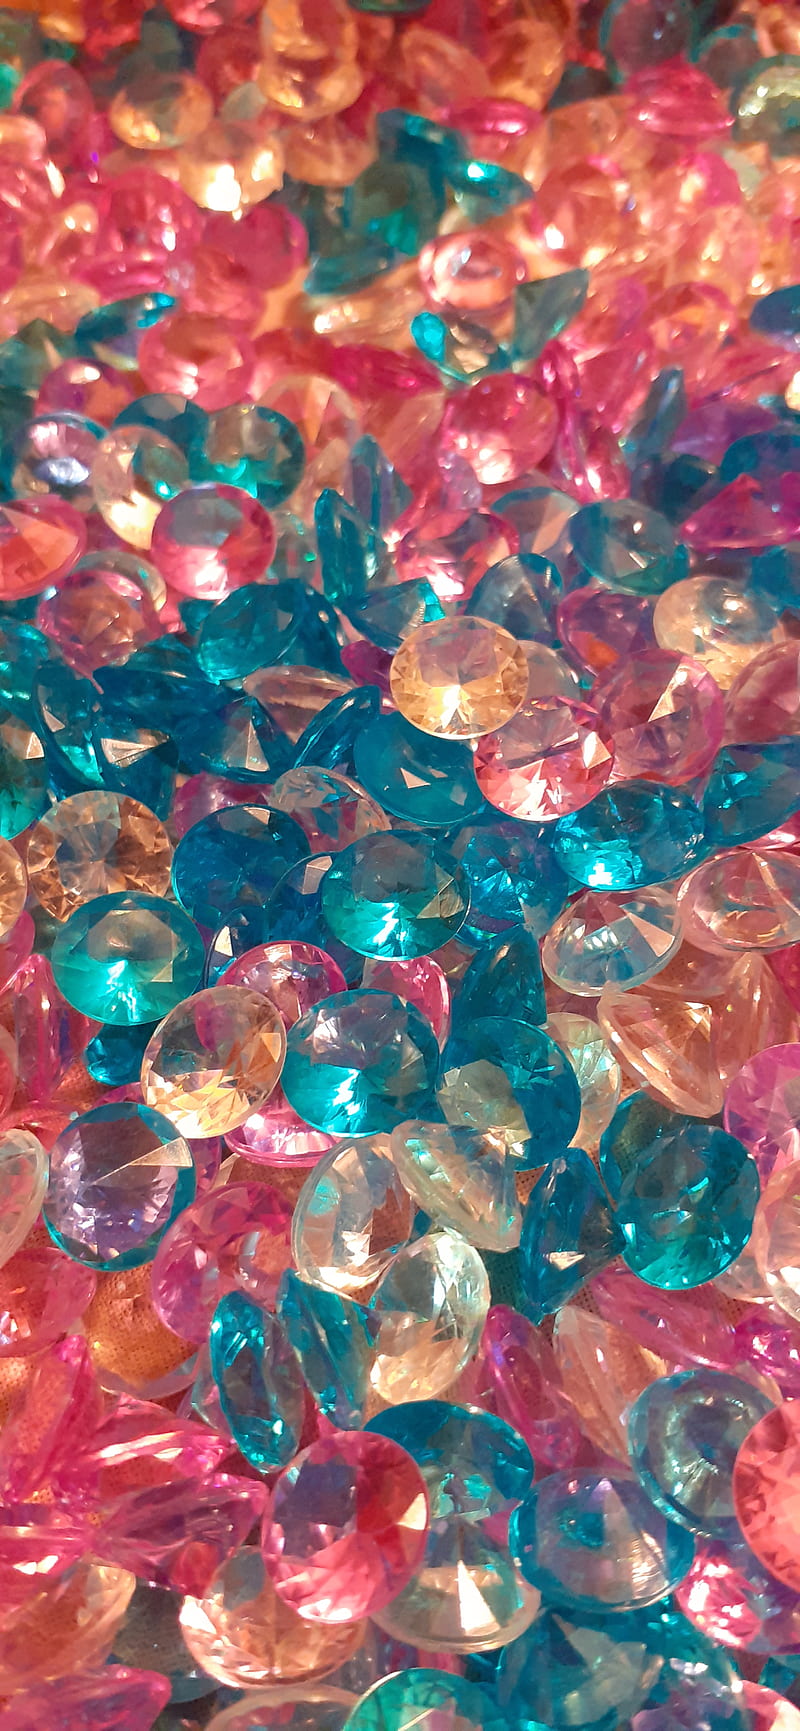 Premium Photo  Shiny gemstones diamonds crystals abstract background  beautiful luxury wallpaper 3d illustration